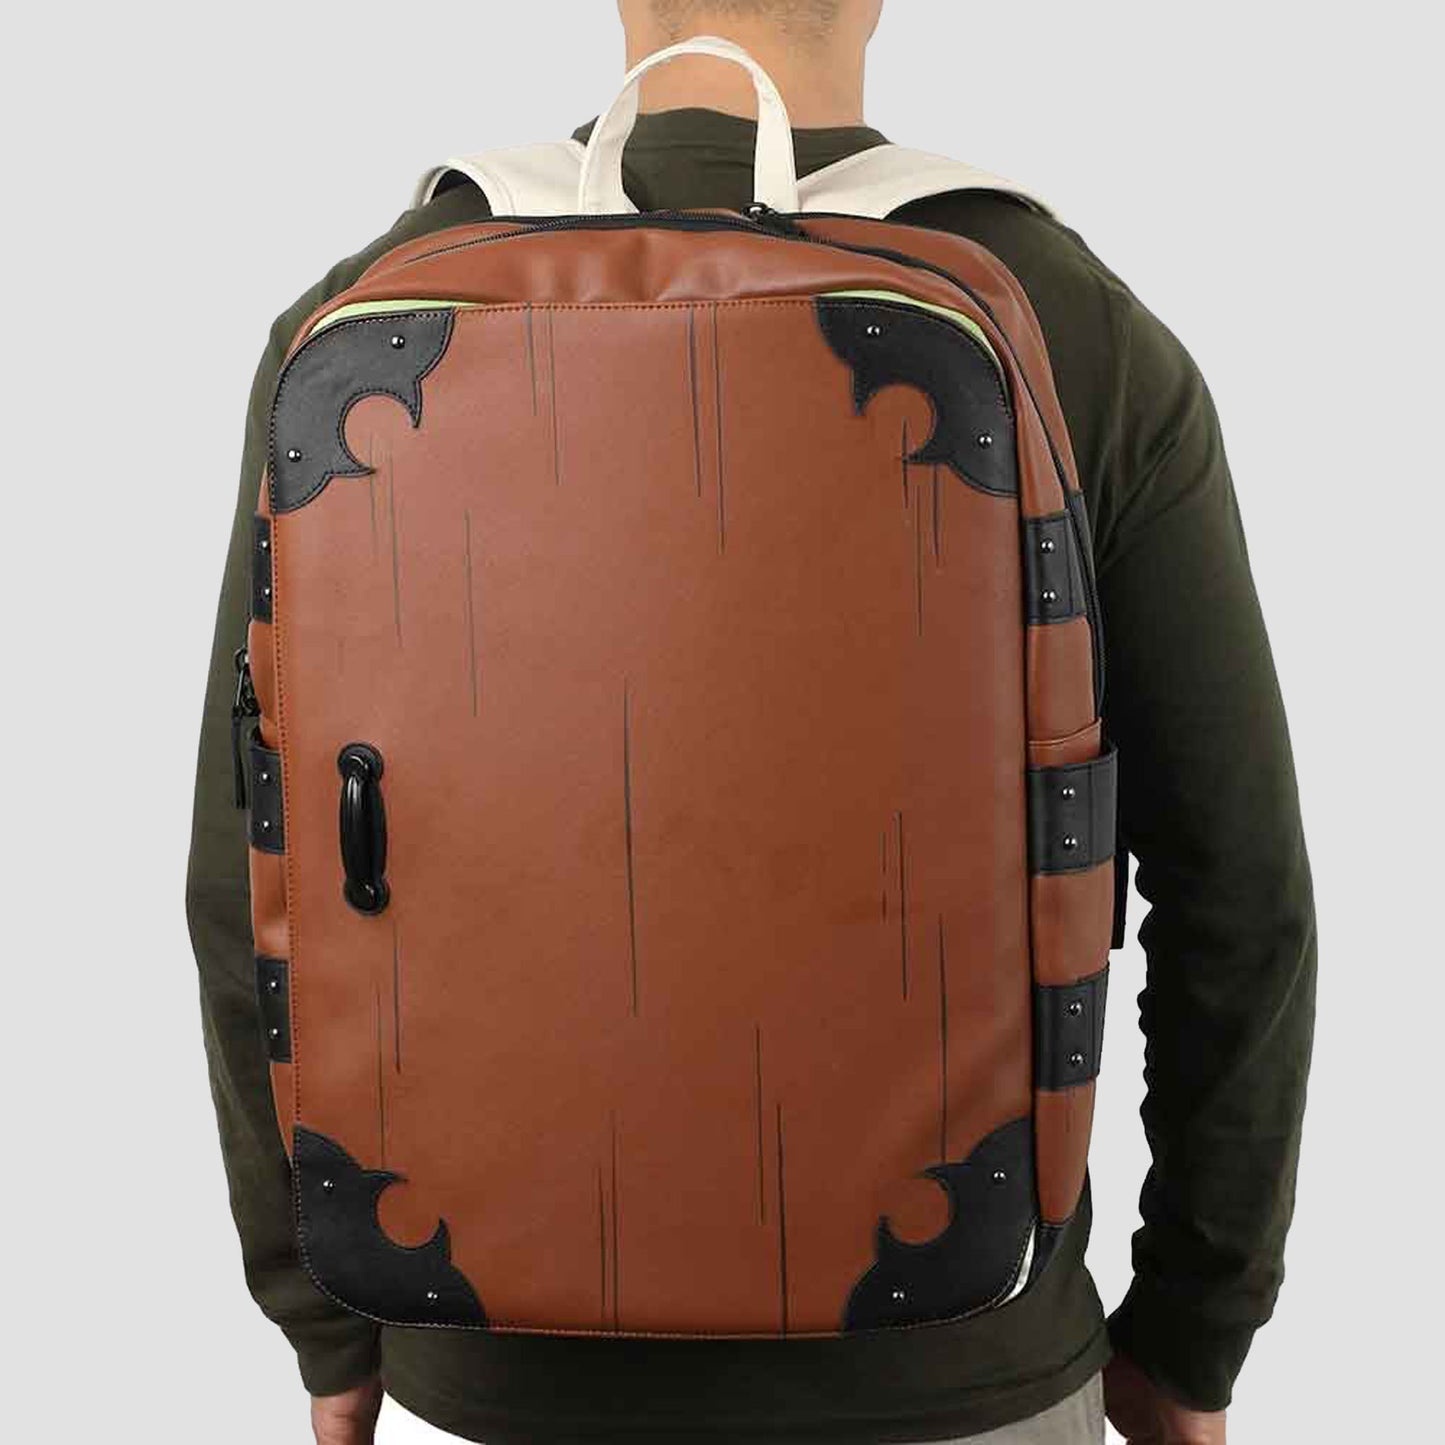 Load image into Gallery viewer, Nezuko Box with Door (Demon Slayer) Laptop Backpack
